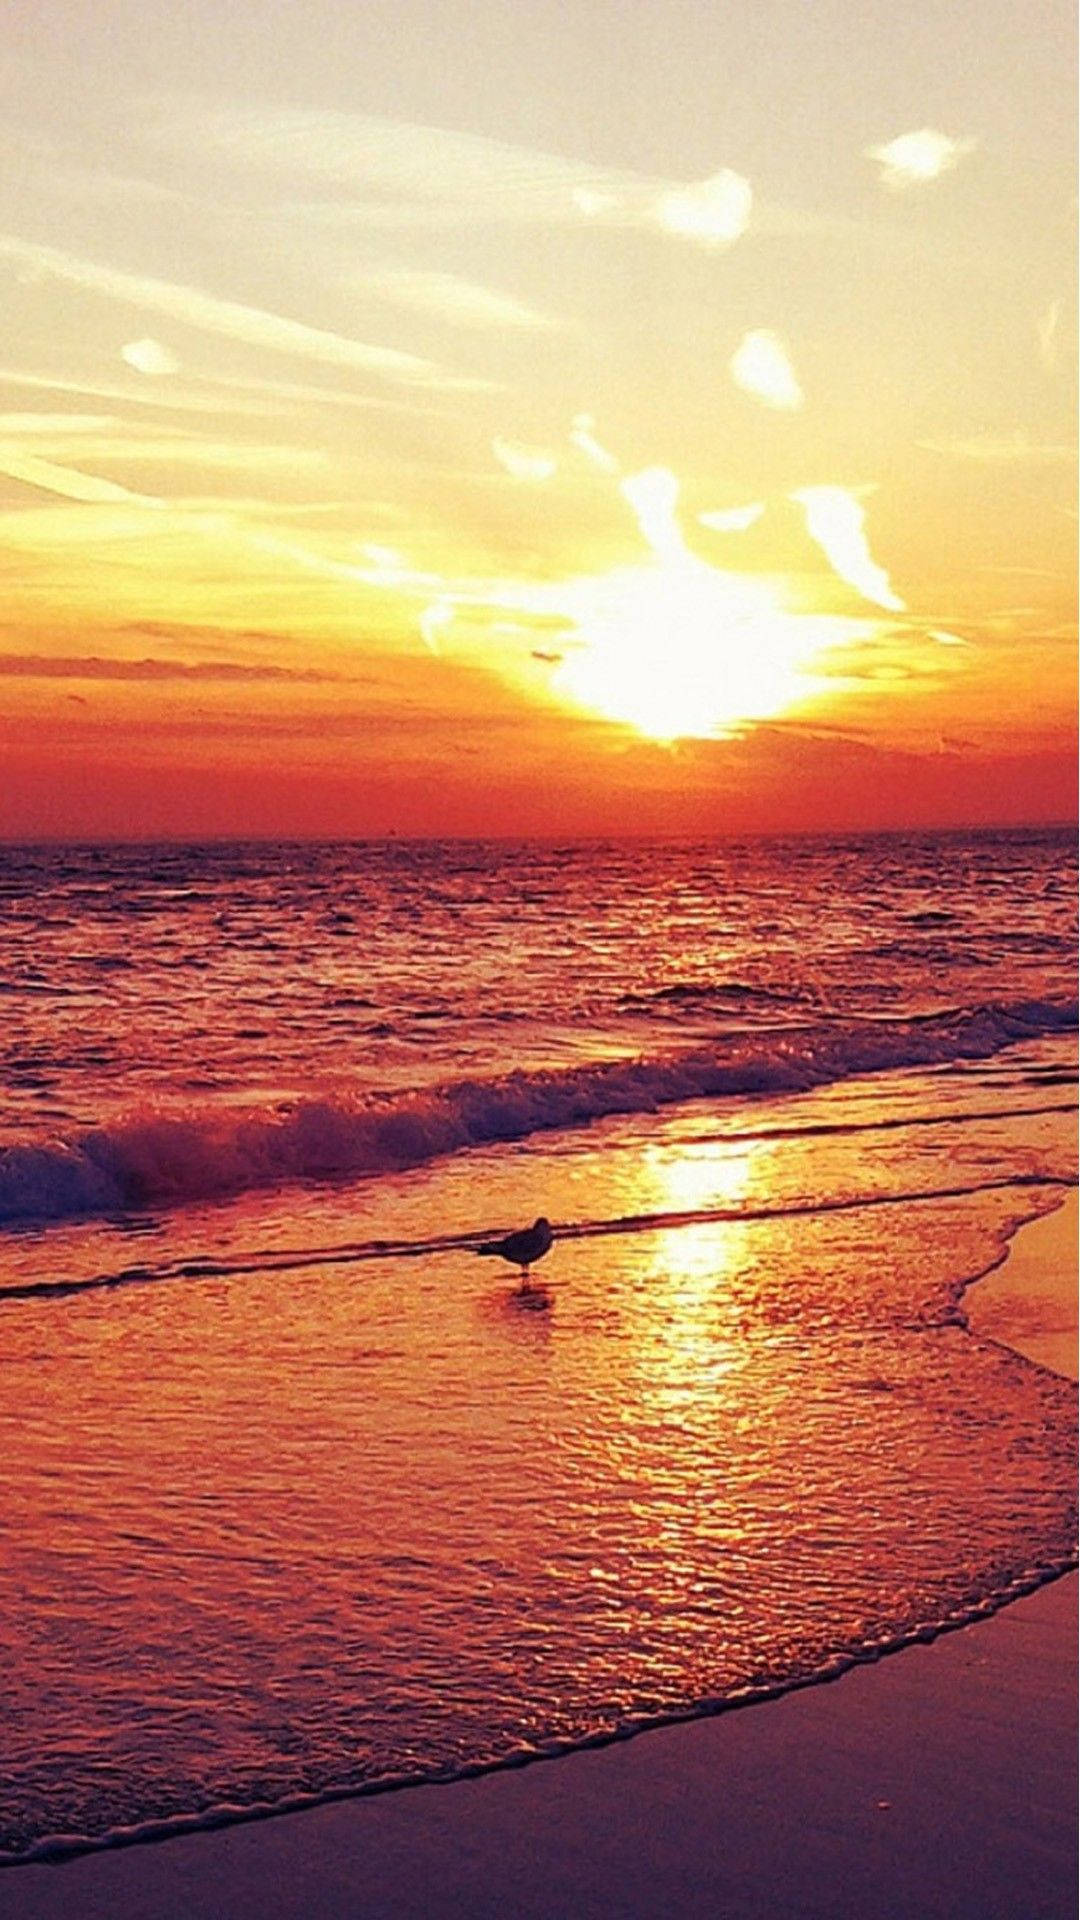 4k Iphone Bird On Beach At Sunset Wallpaper